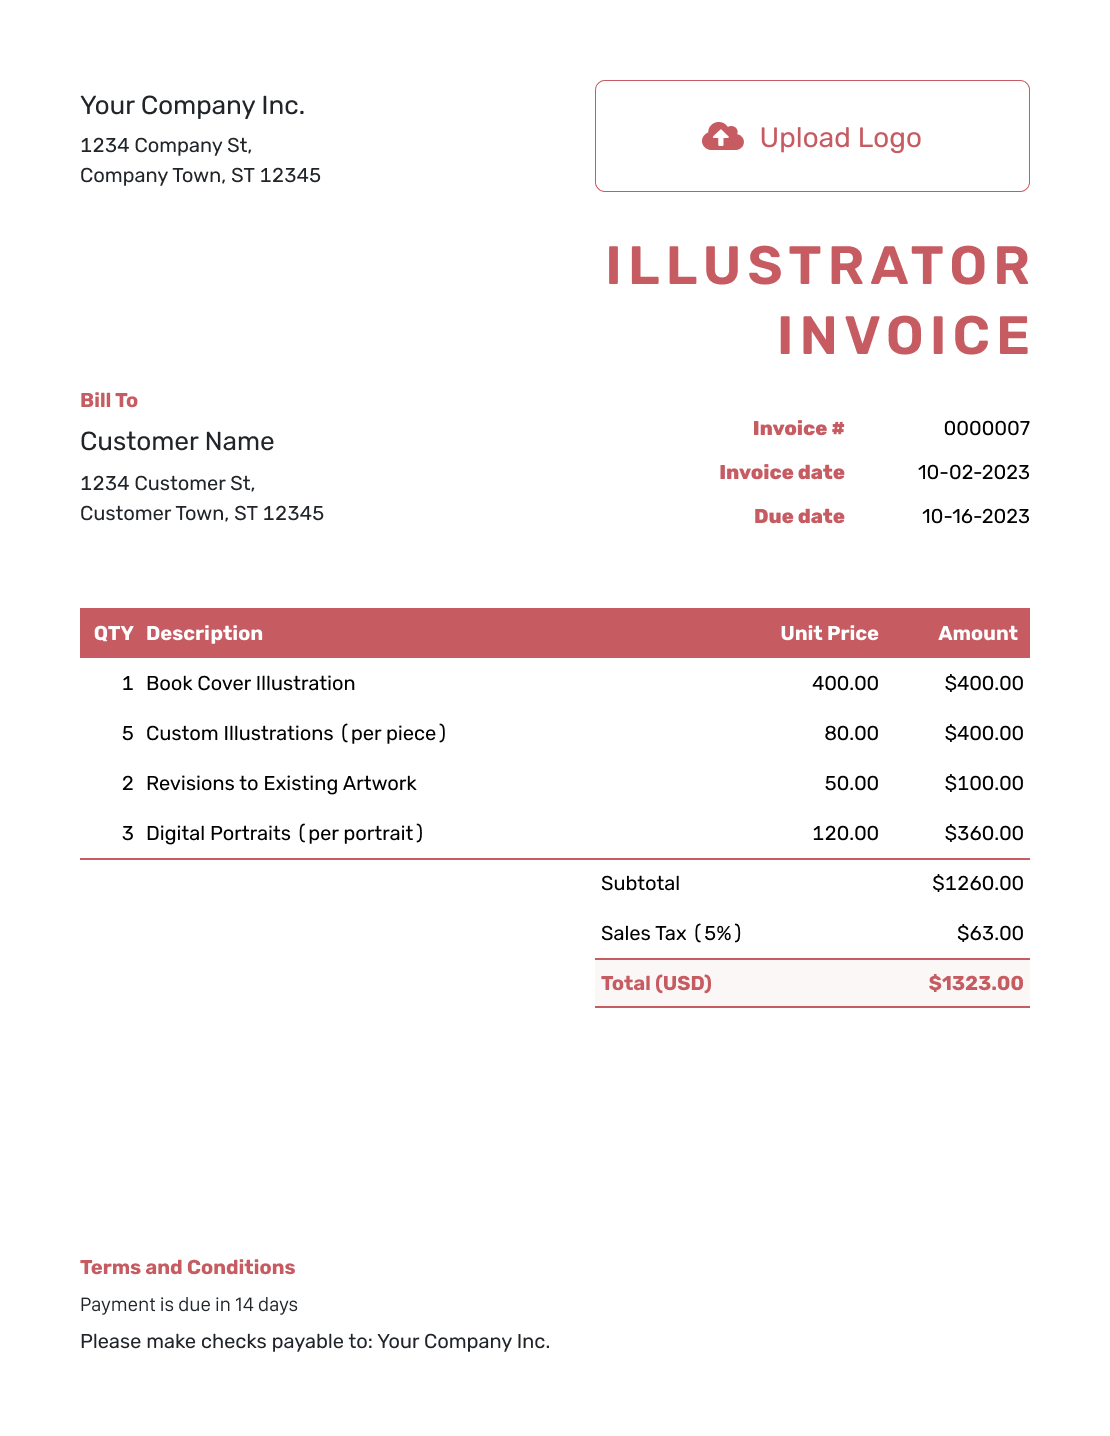 Itemized Illustrator Invoice Template